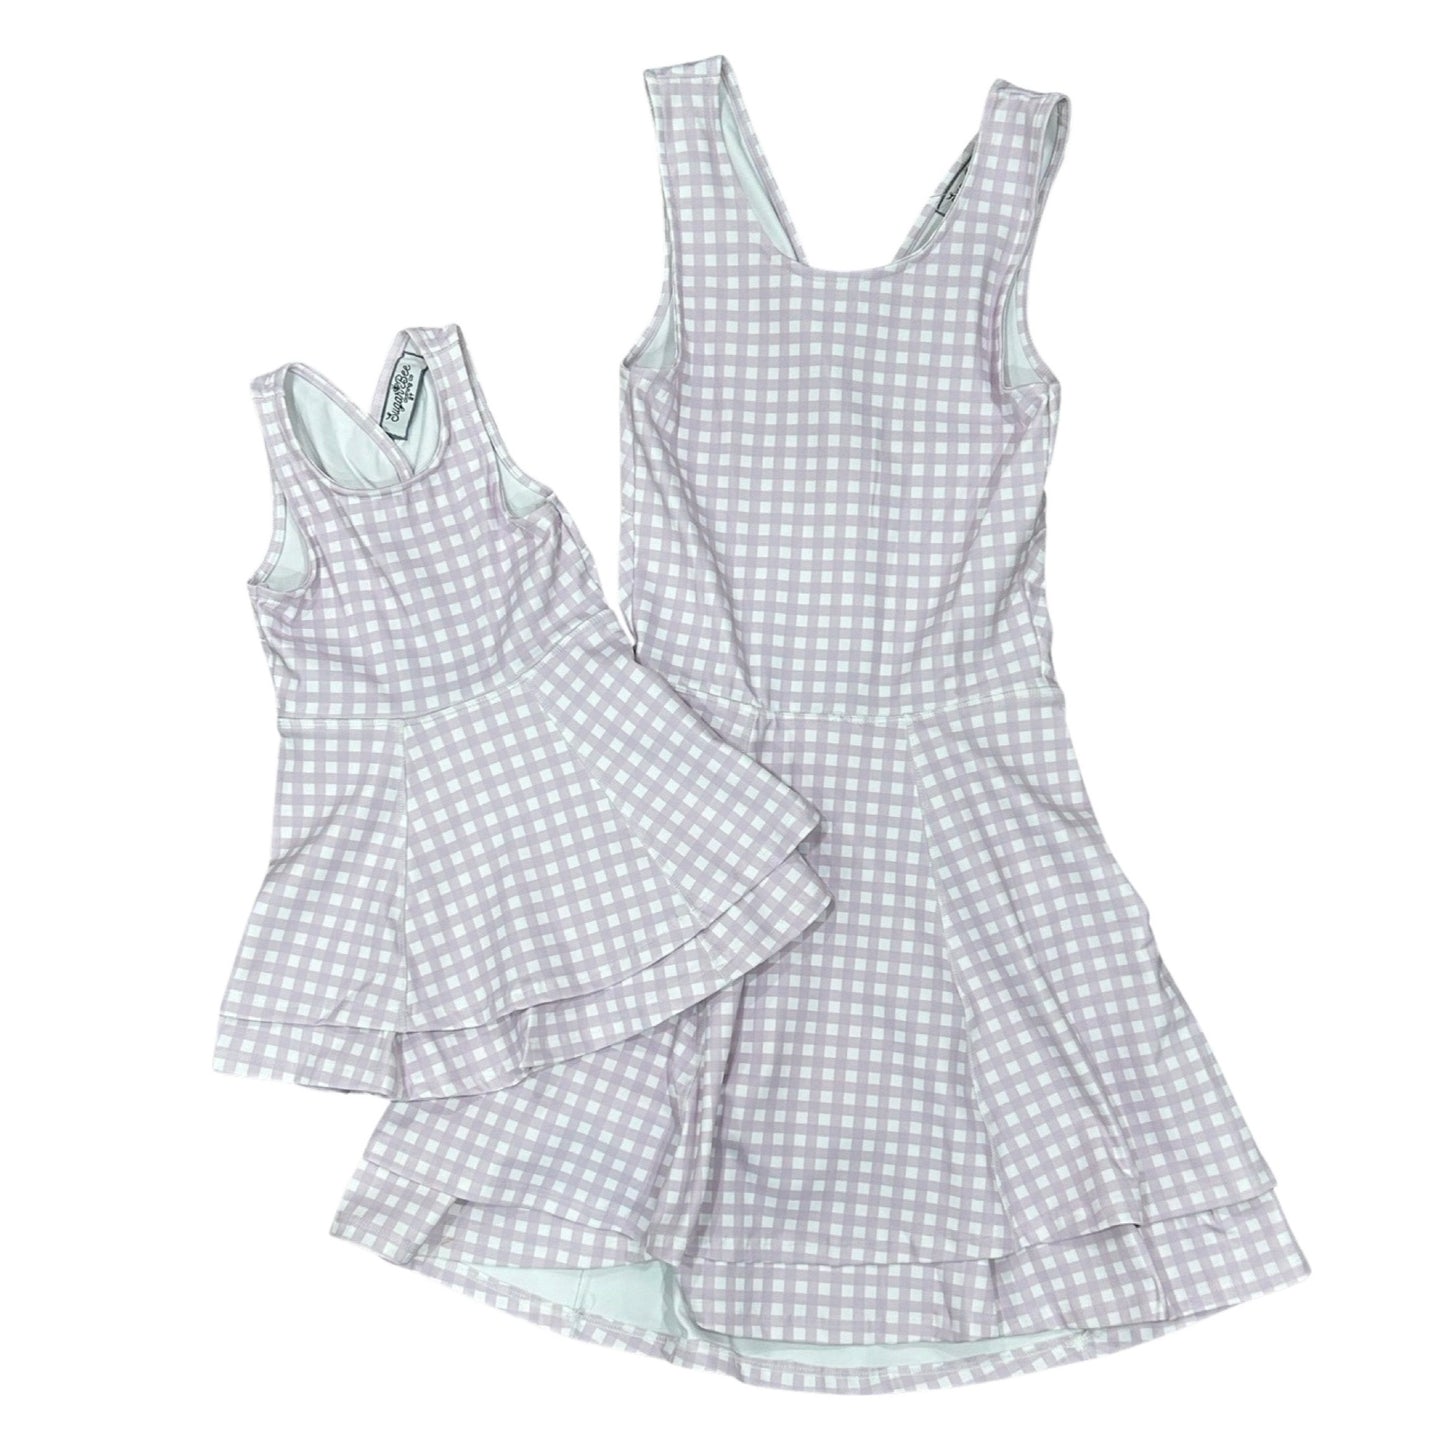 Ruffle Tennis Dress - Lavender Gingham